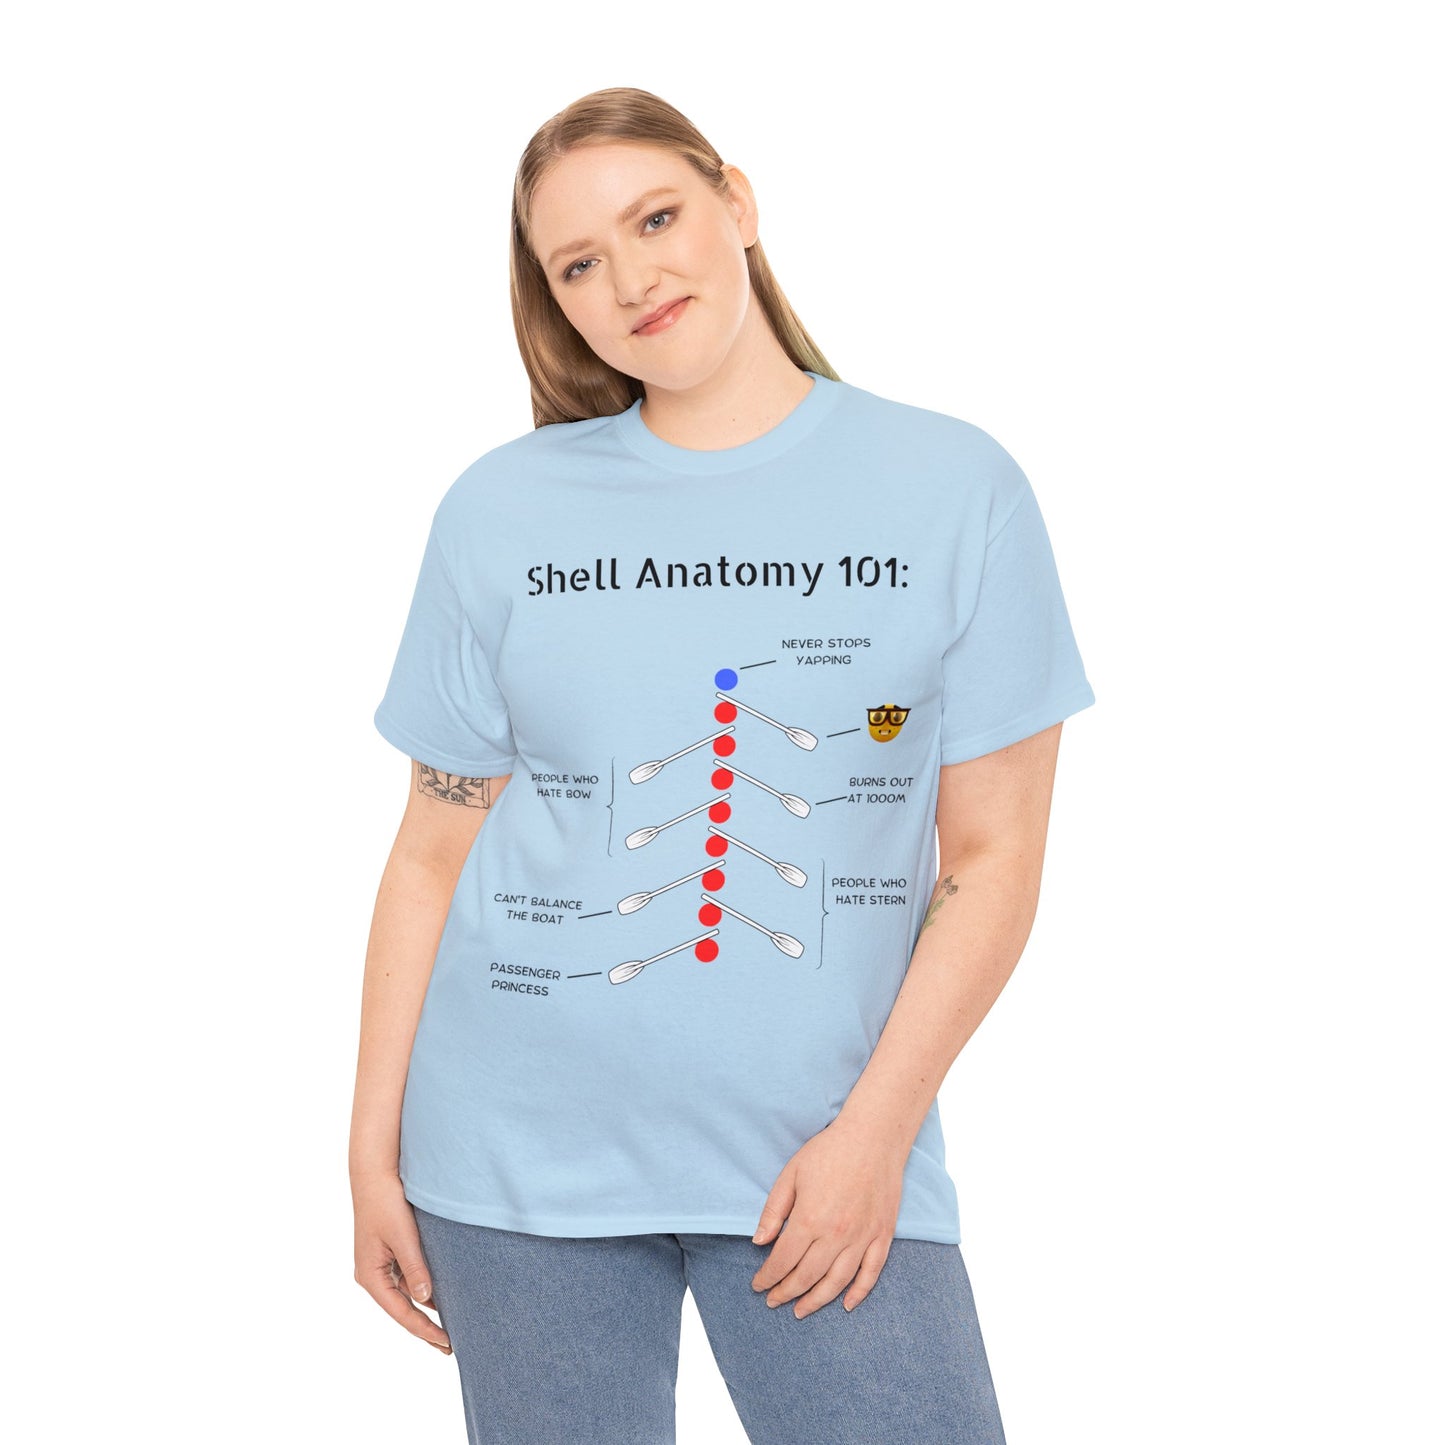 "Shell Anatomy 101" - Tee